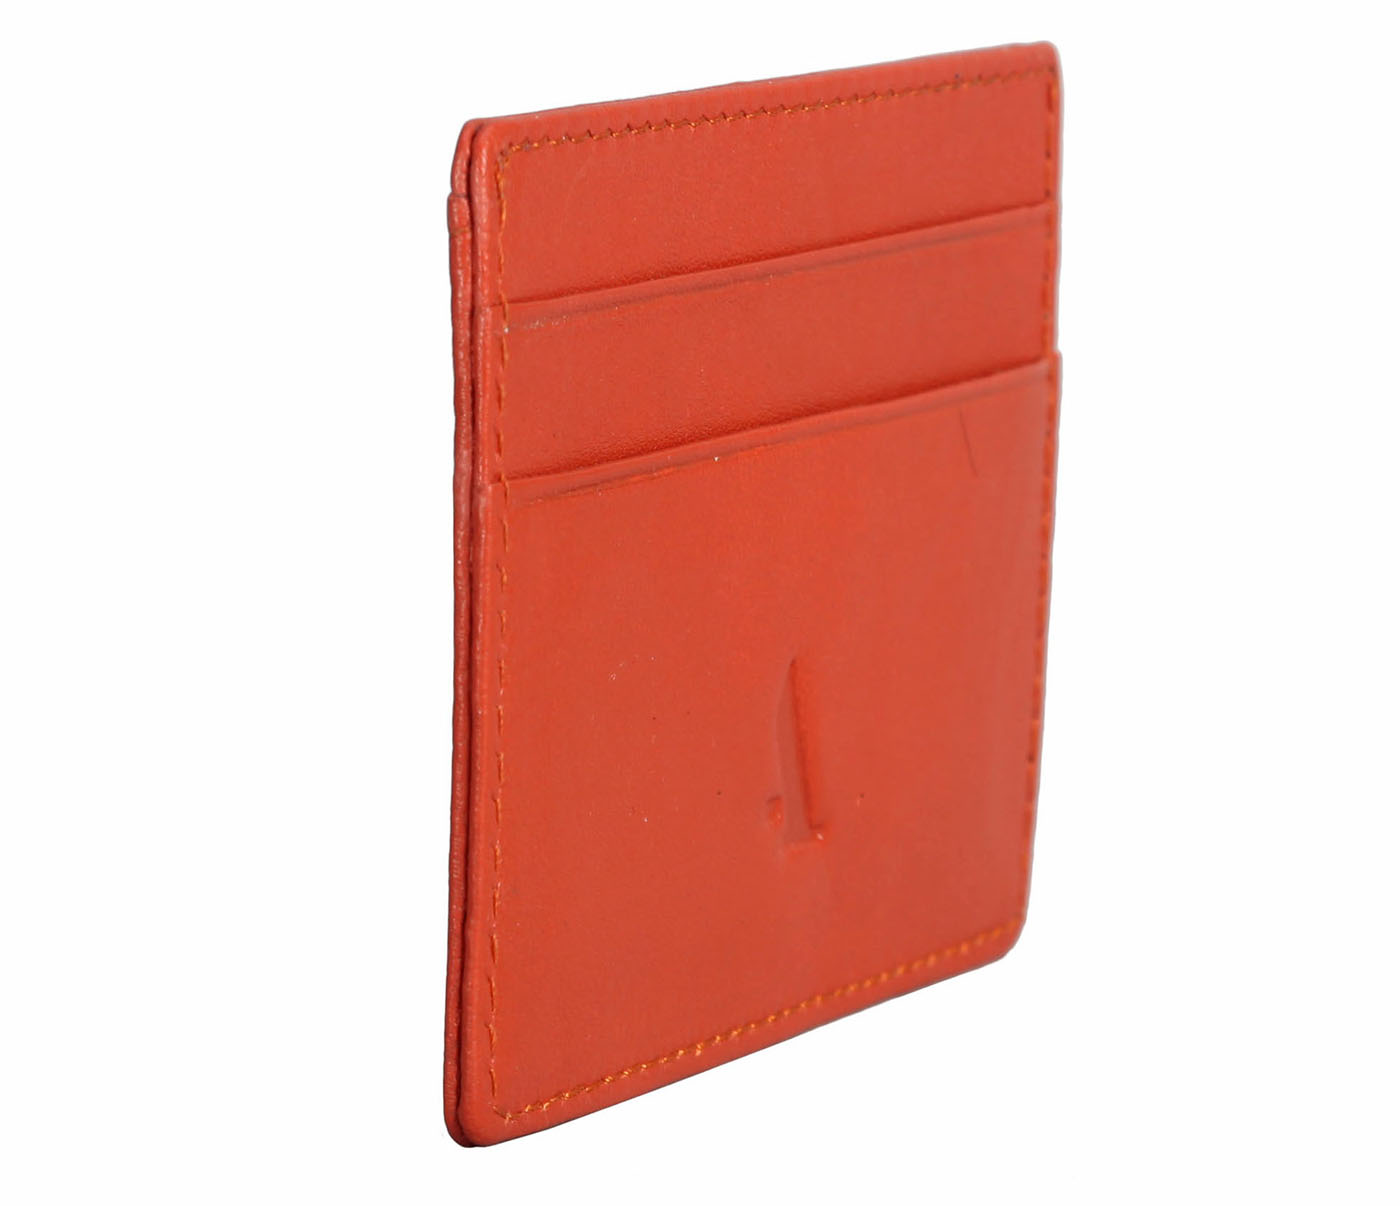 Card Case--Credit card holder with transparent slot in Genuine leather - Orange